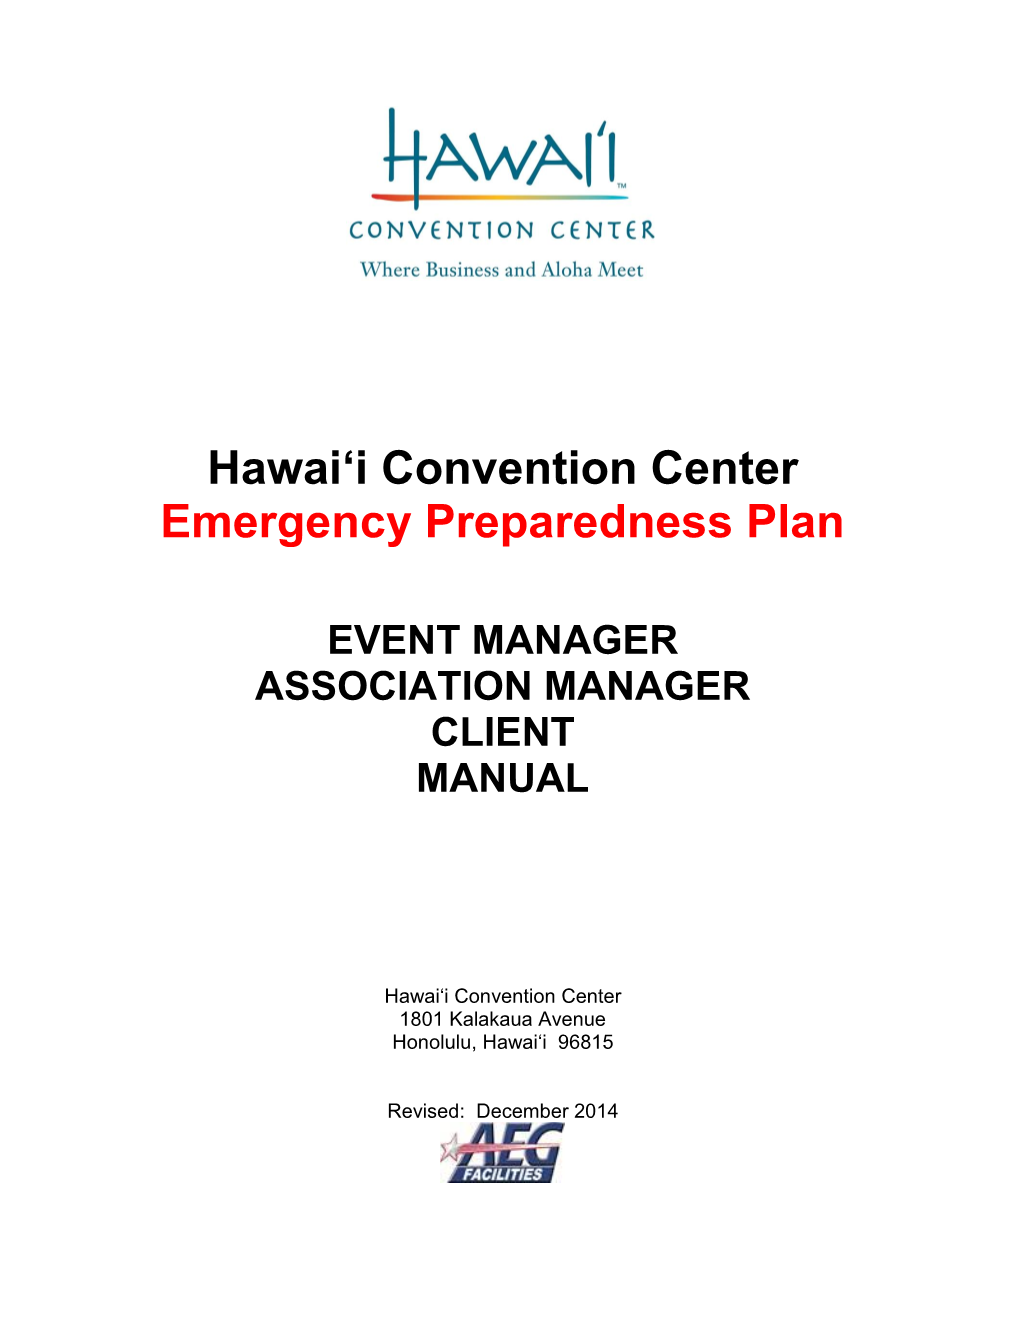 Hawai'i Convention Center Emergency Preparedness Plan